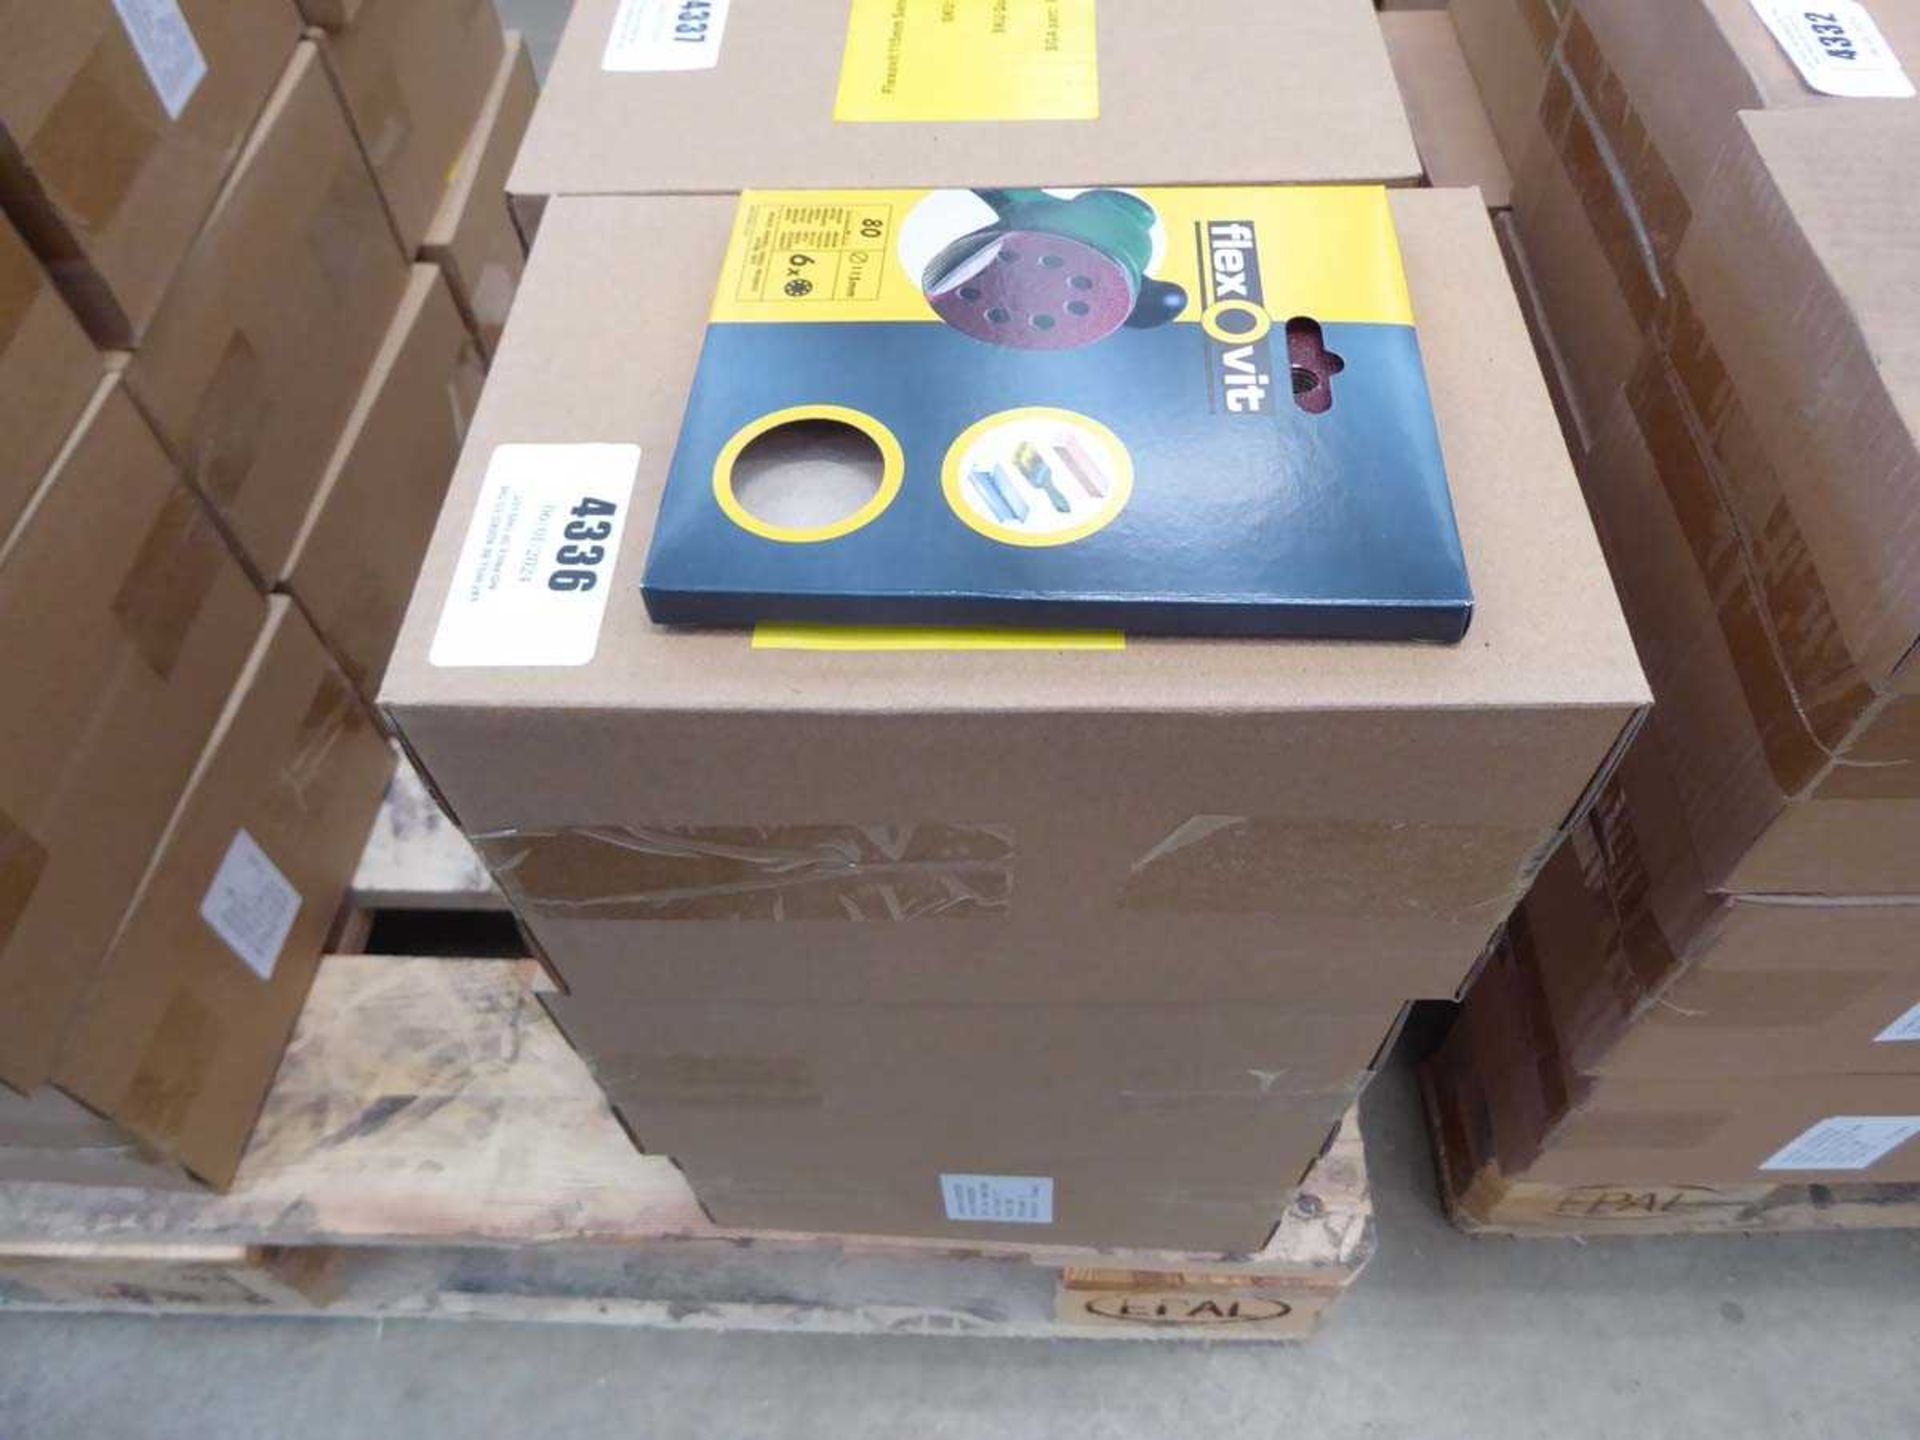 +VAT Three boxes of 115mm 80 grit sanding discs